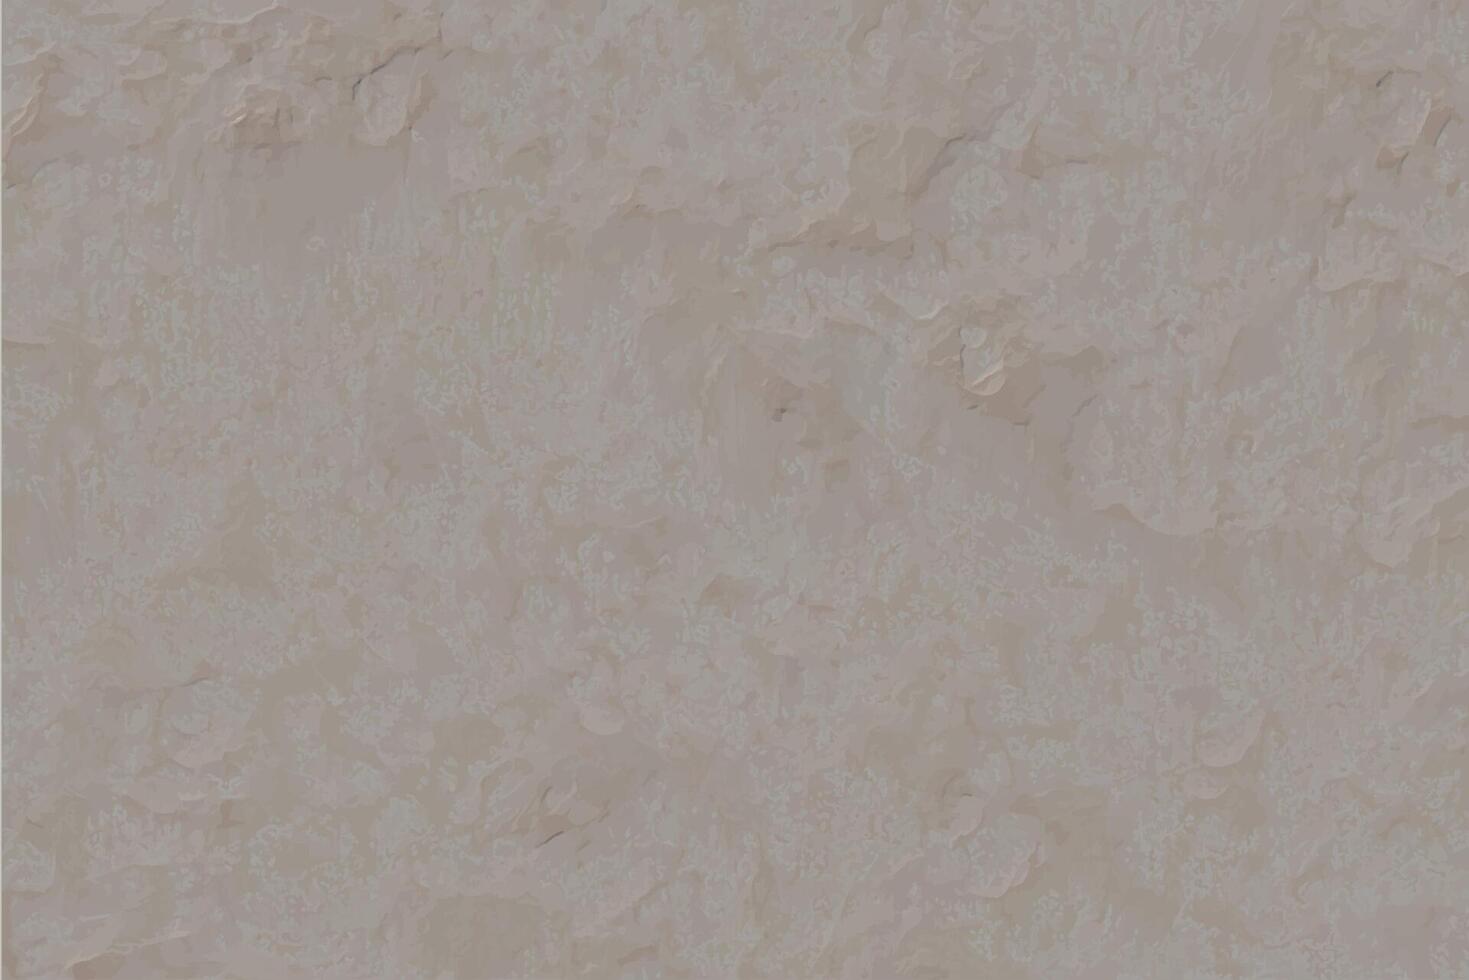 rough concrete wall texture background vector